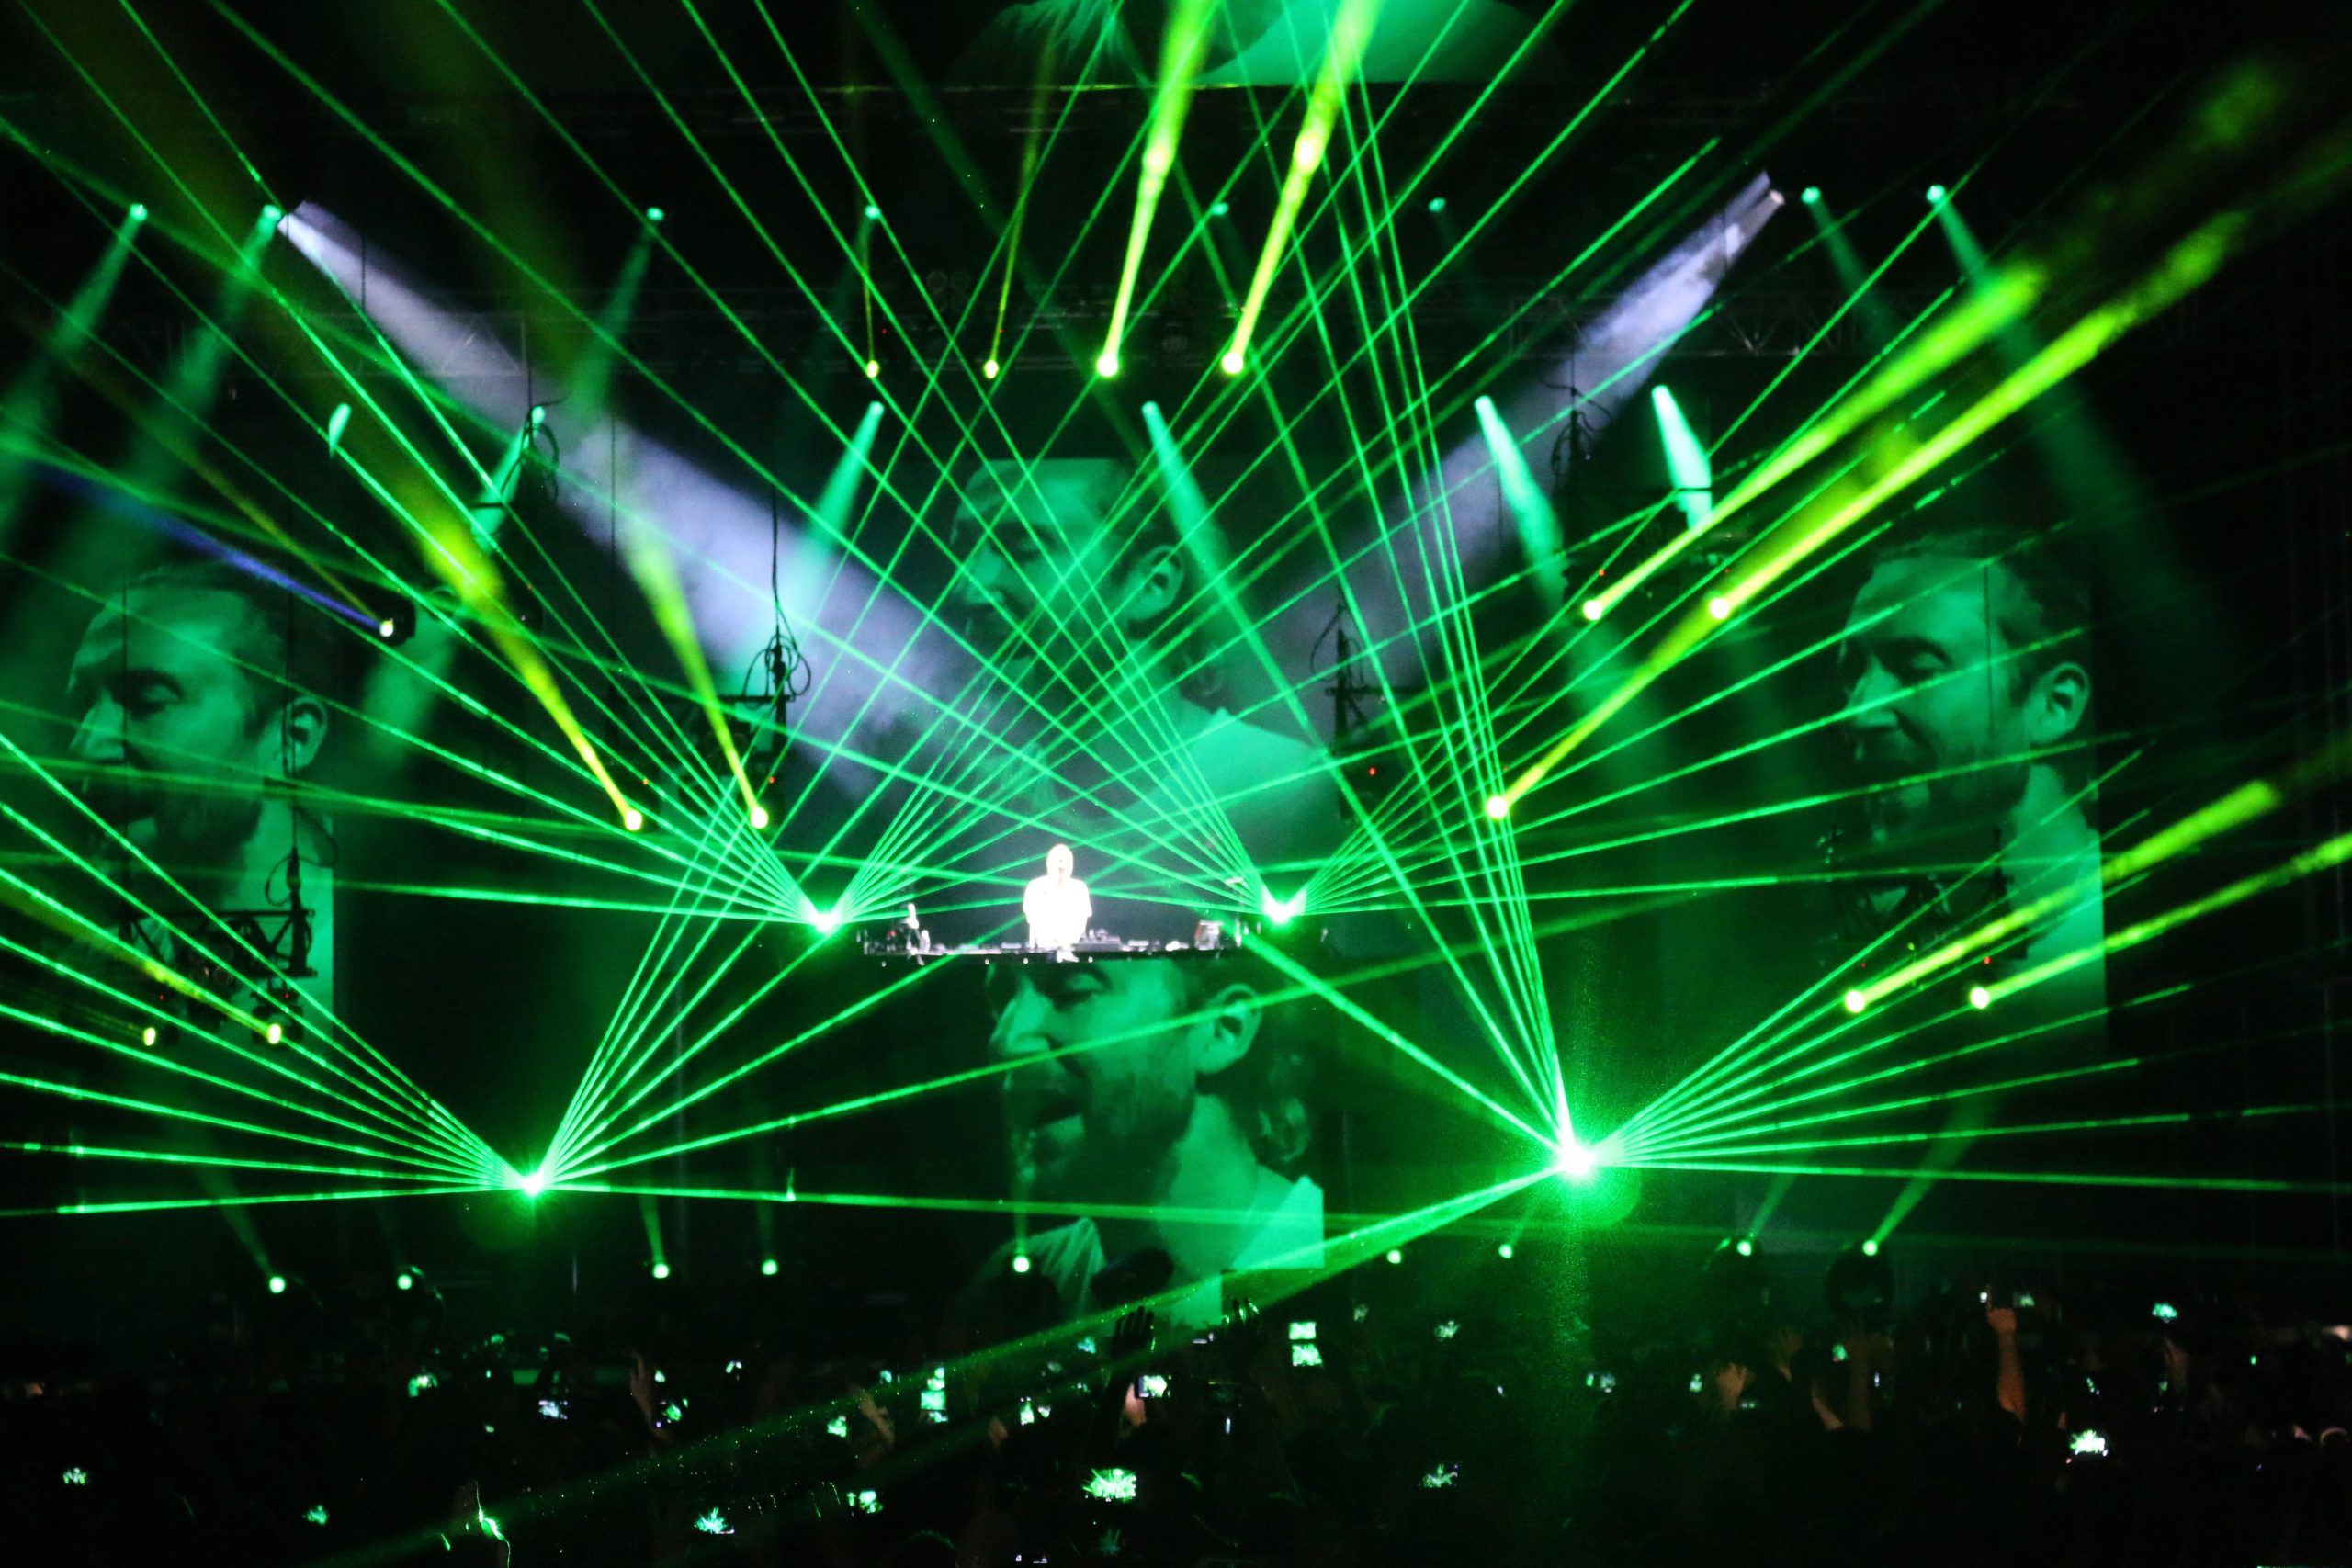 Europe Évènement - Festivals - Photo of a DJ David Guetta concert with green laser beams around him